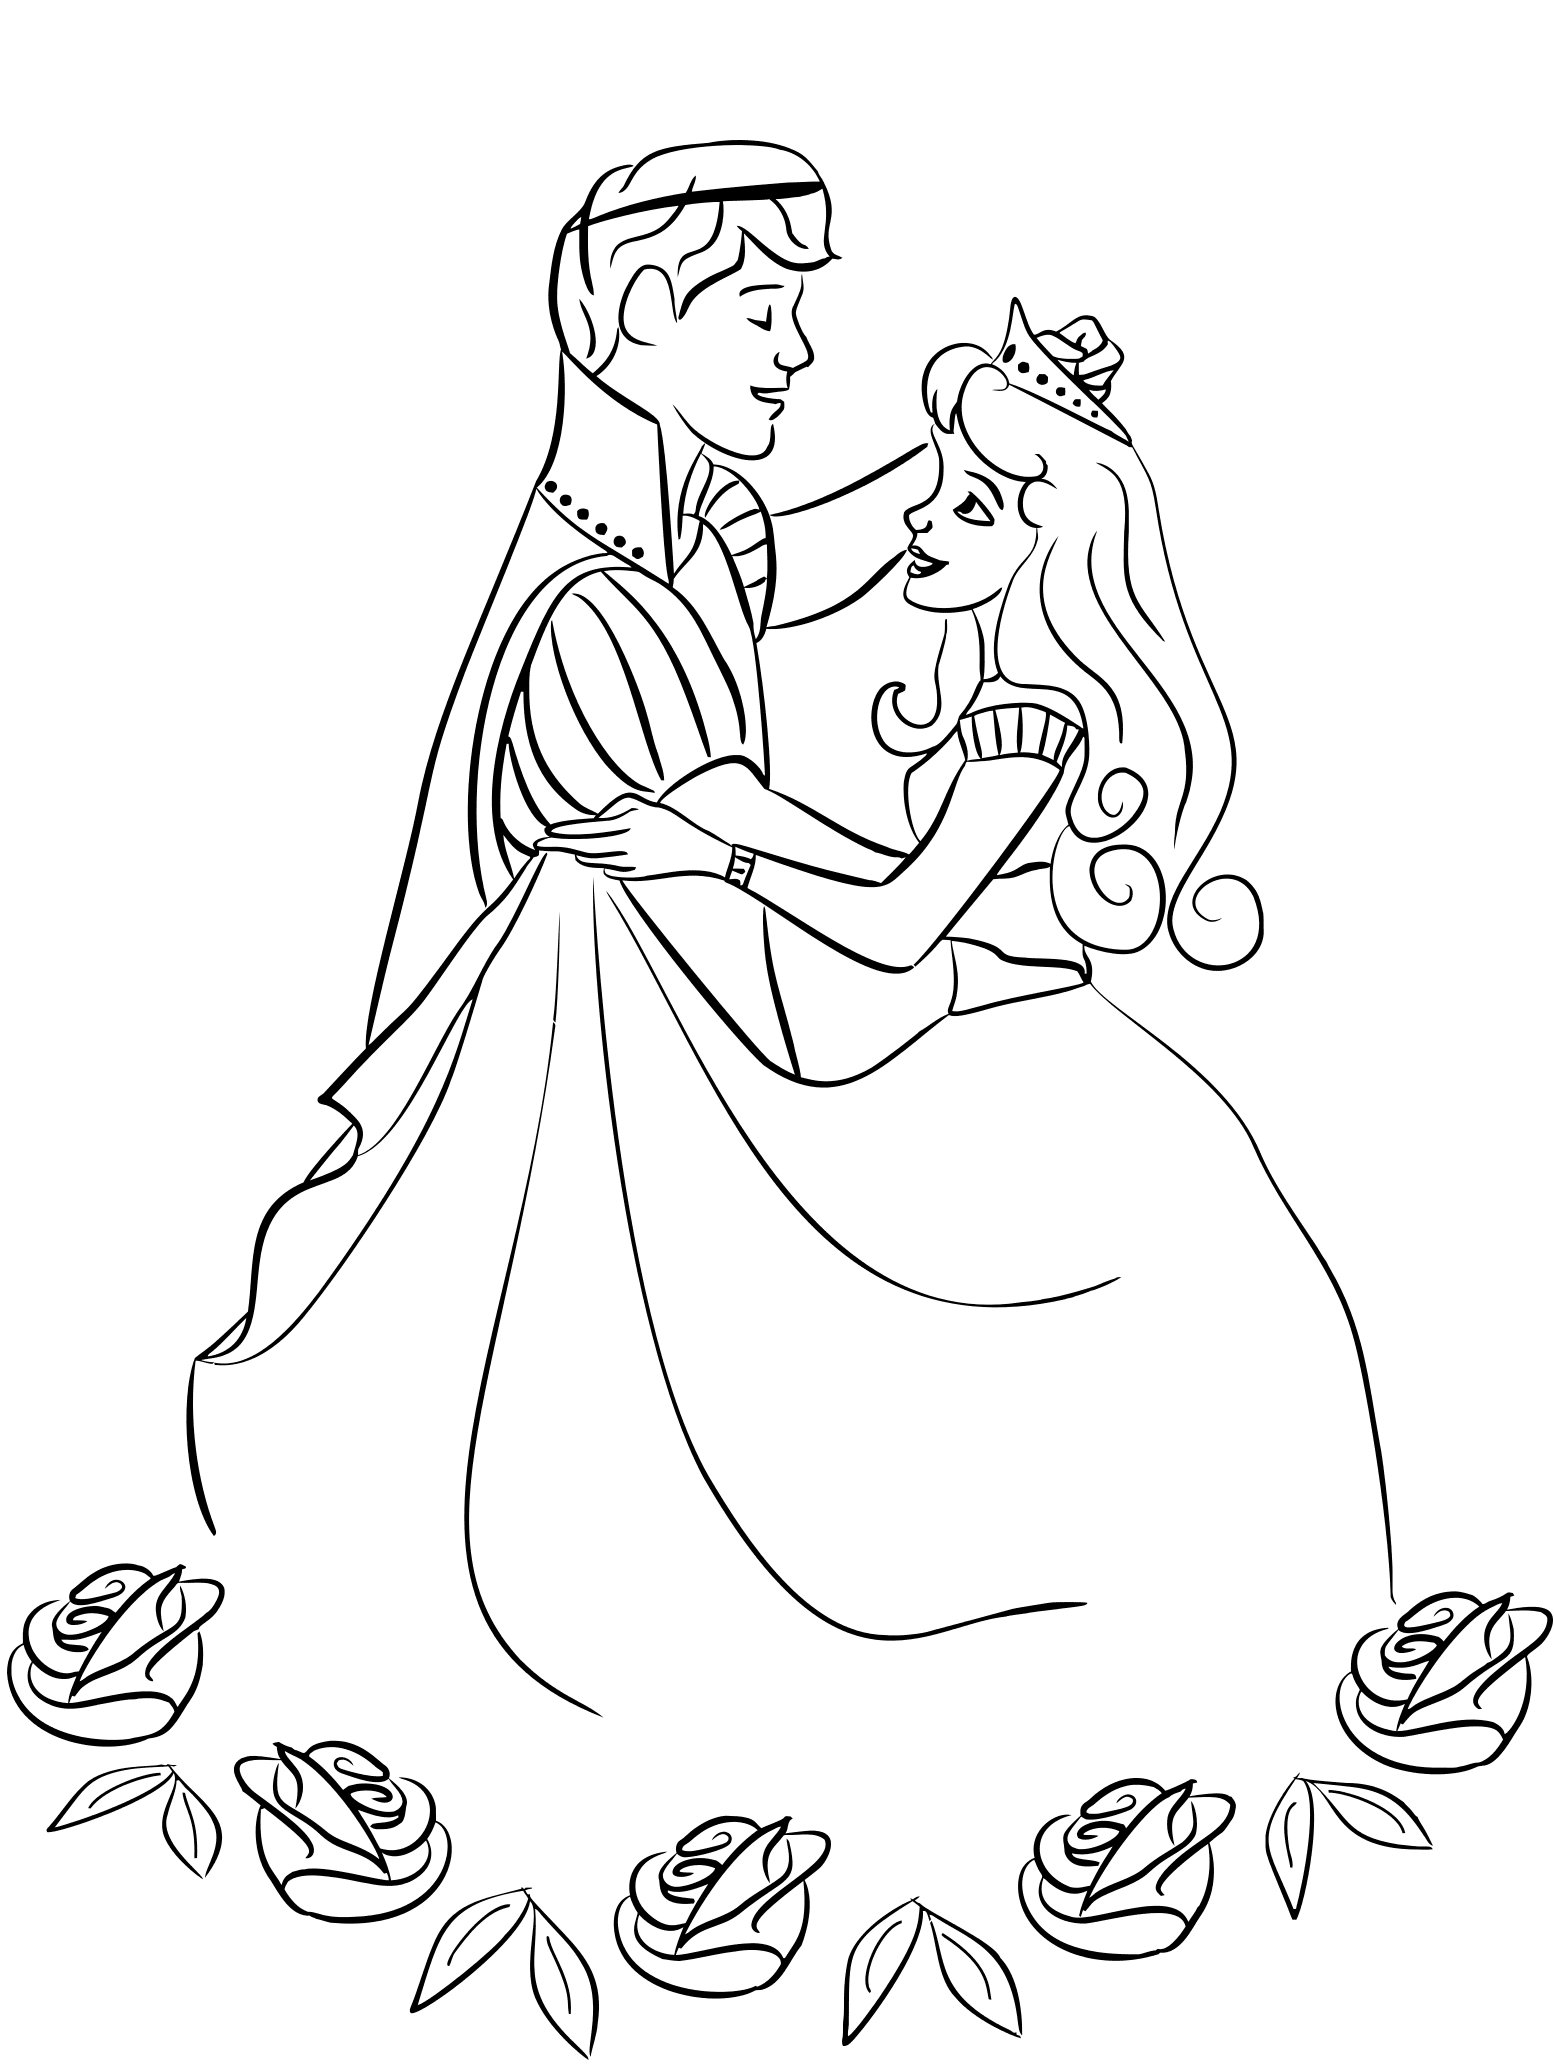 Prince And Princess Dancing Coloring Page